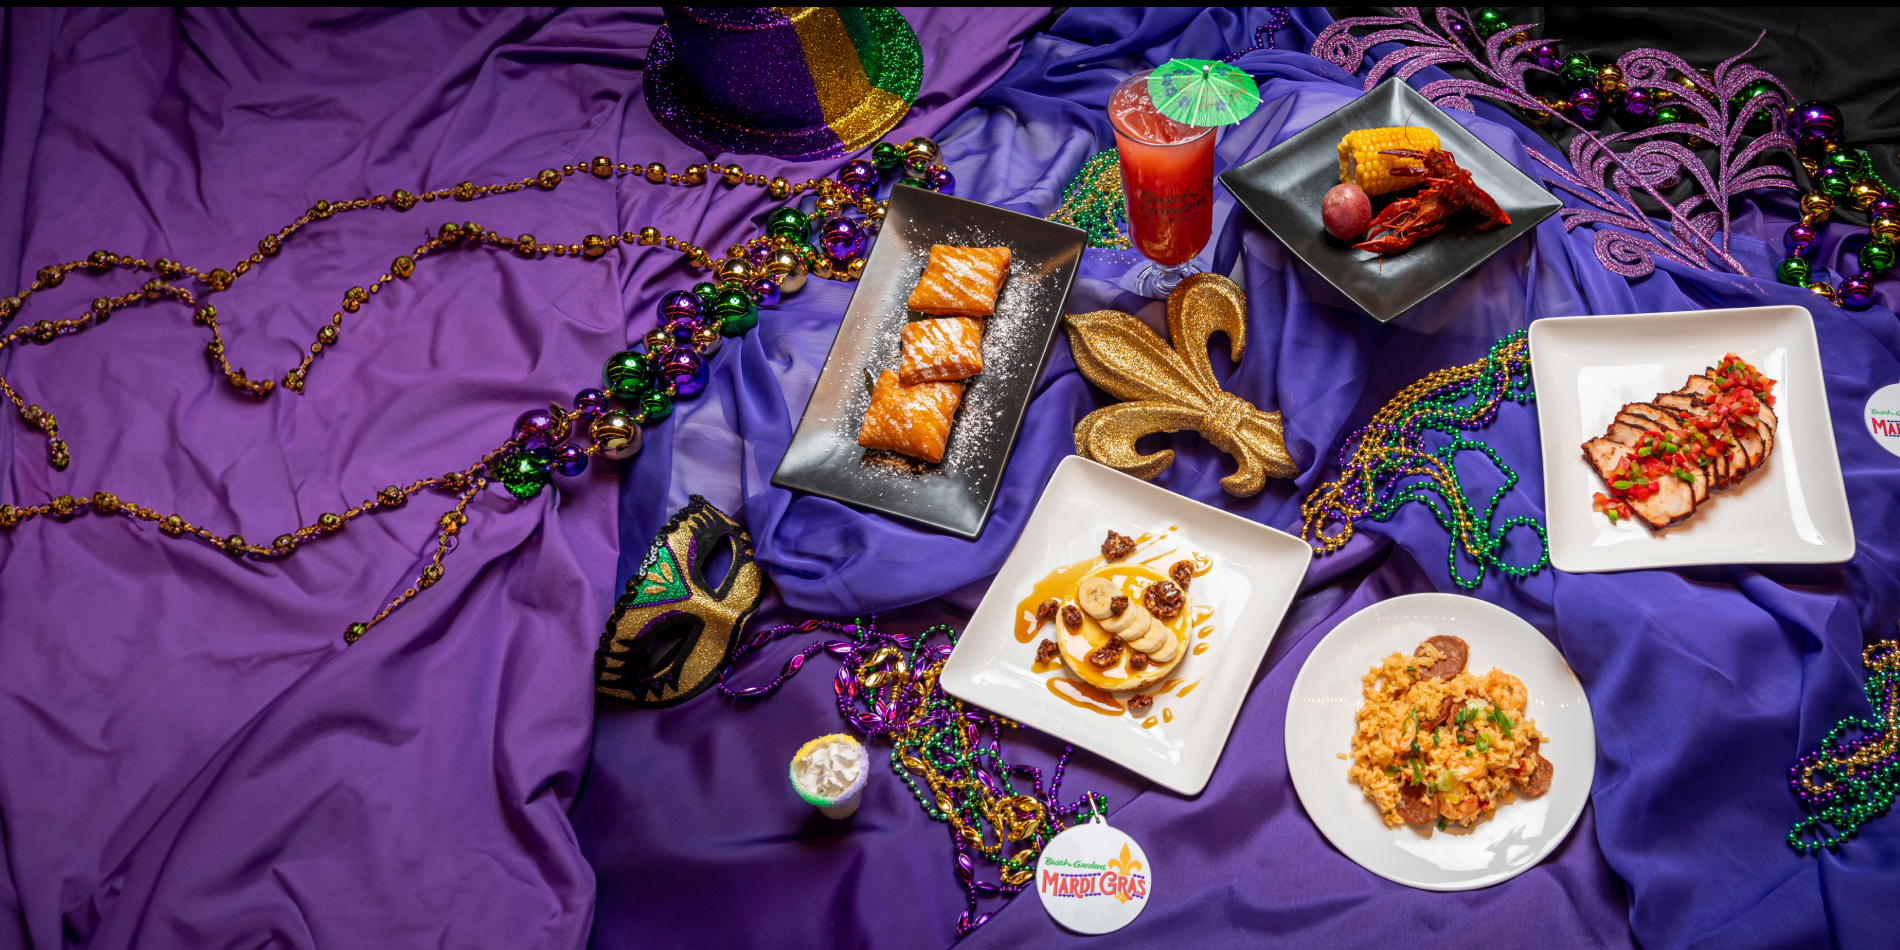 Cajun and Mardi Gras themed foods at Busch Gardens Williamsburg Mardi Gras event.